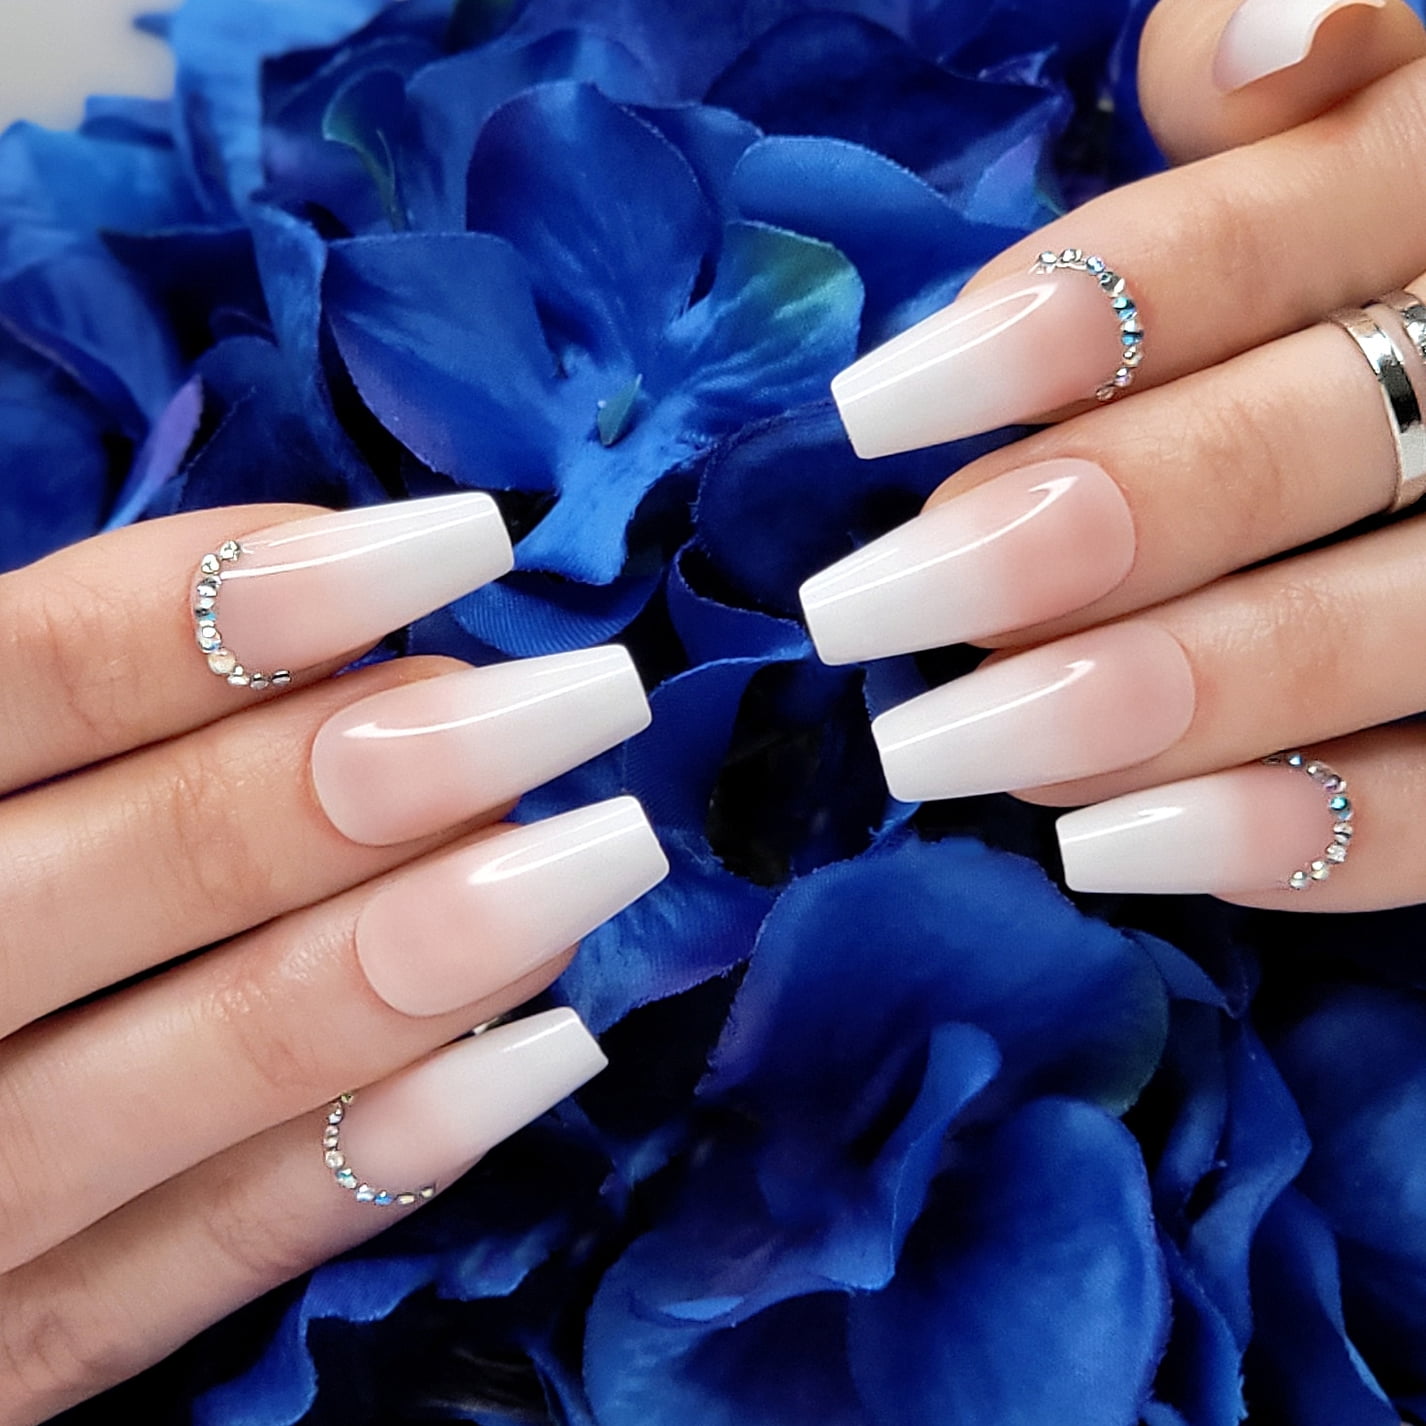 74 White Nails With Diamonds That Will Amaze You